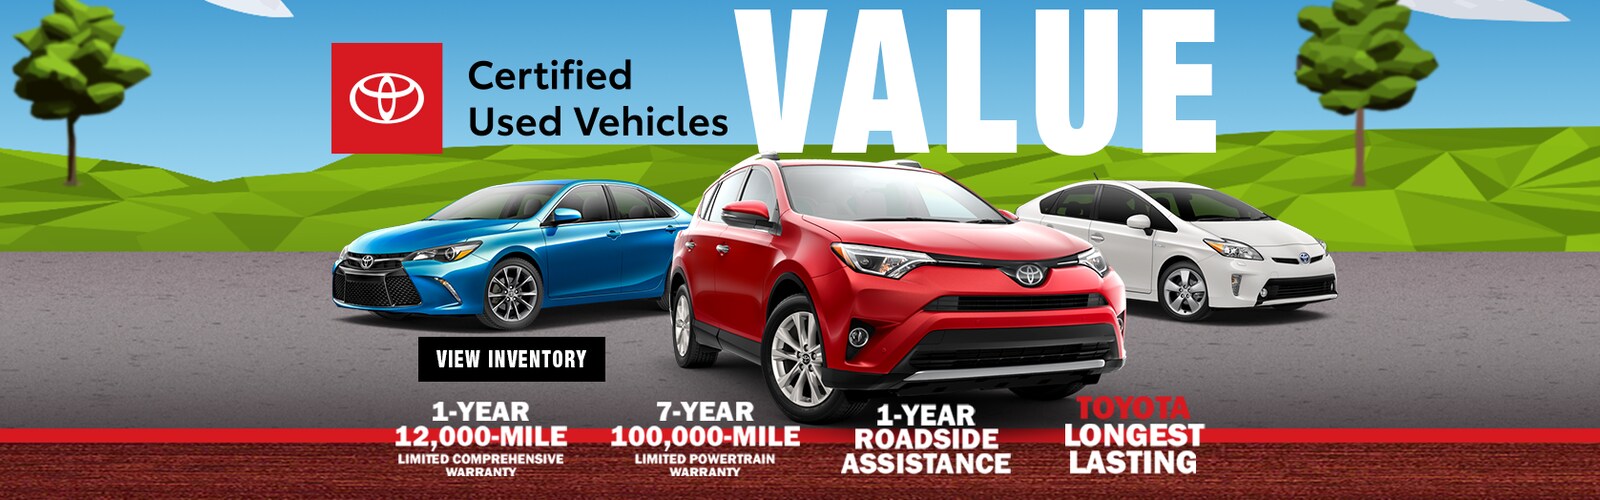 New Toyota Dealership in Vermont | 802 Toyota